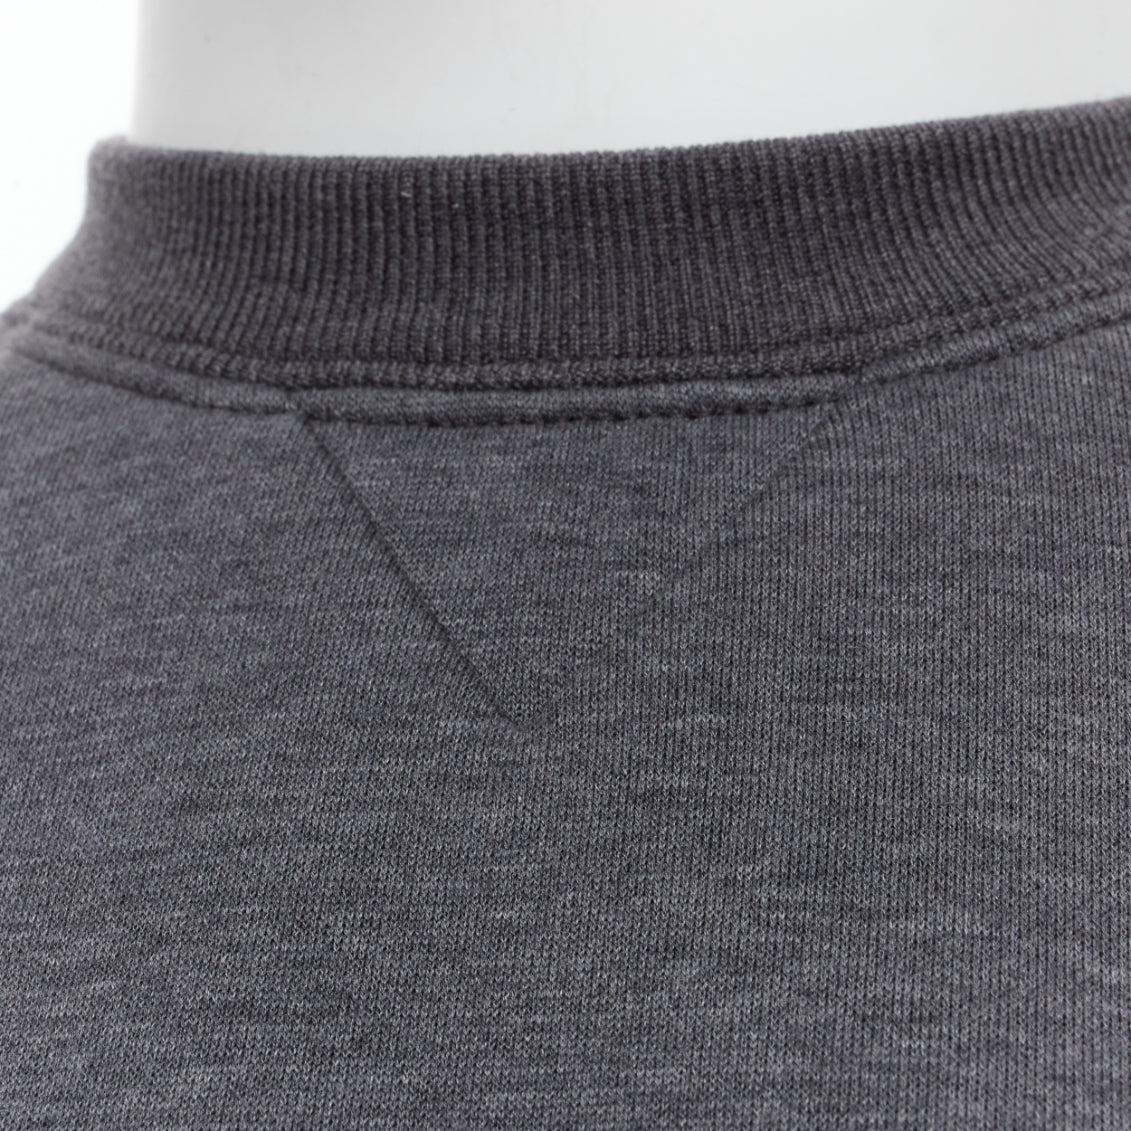 new PRADA 2021 grey cotton triangle boxy structured pullover sweater EU46 S 3